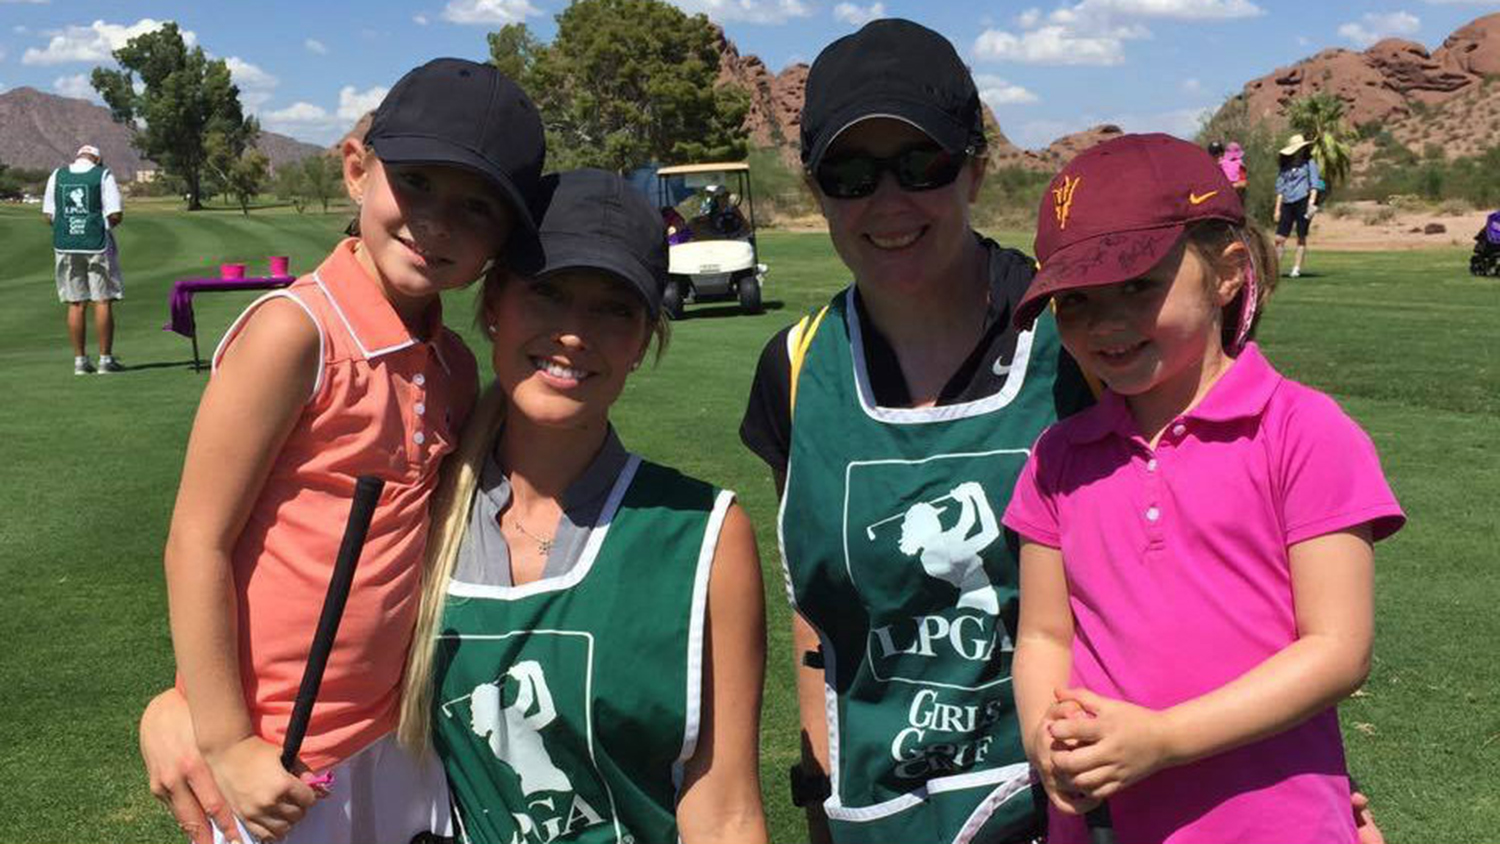 LPGA - USGA Girls Golf womensgolf.com